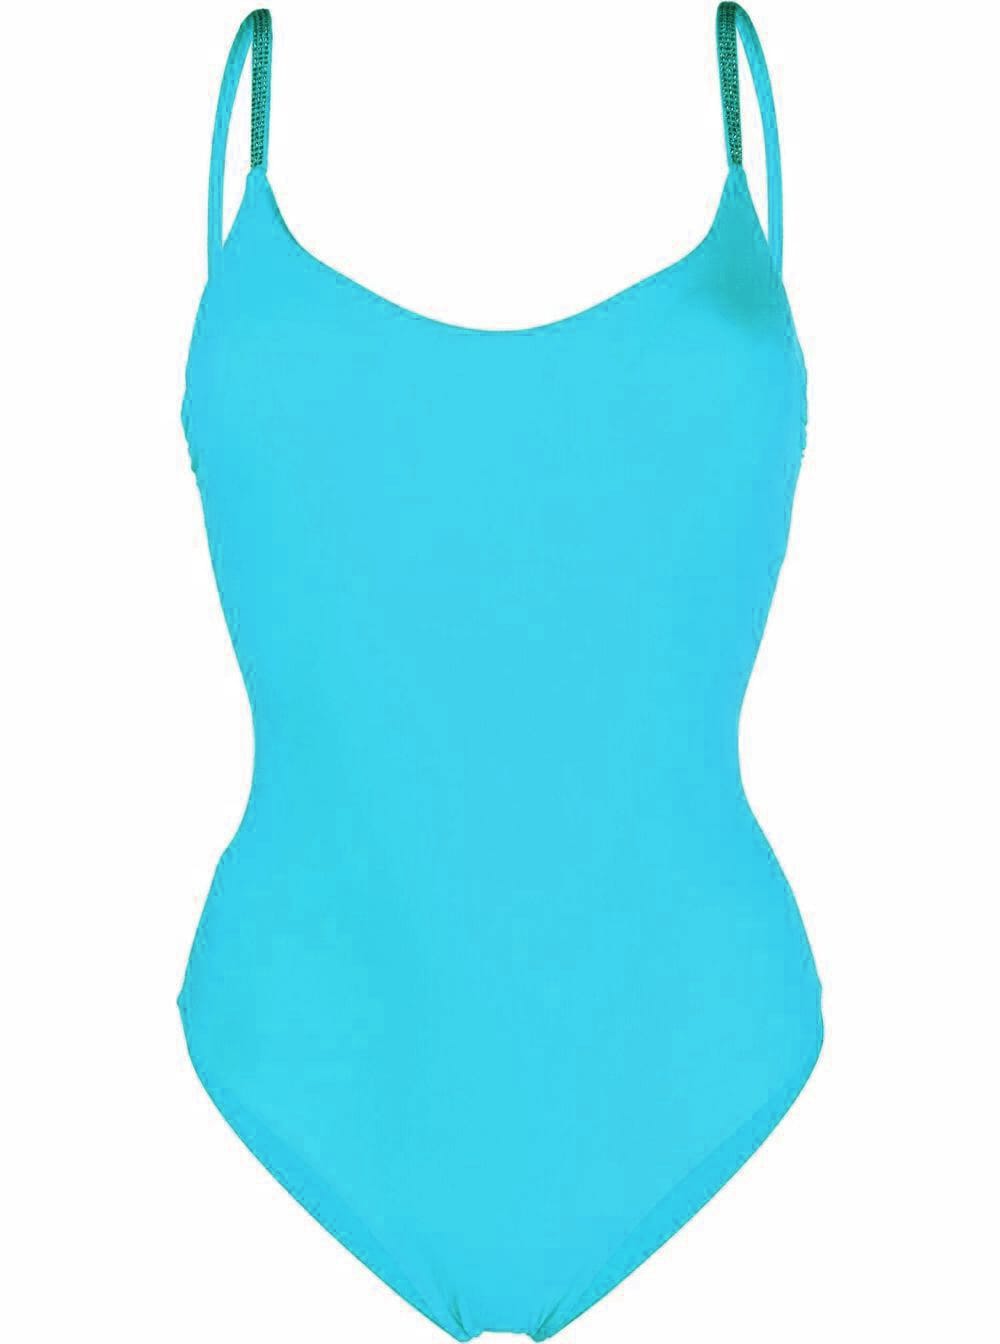 Fisico - Cristina Ferrari Fisico Womans Turqoise One-piece Stretch Fabric Swimsuit With Glittered Inserts